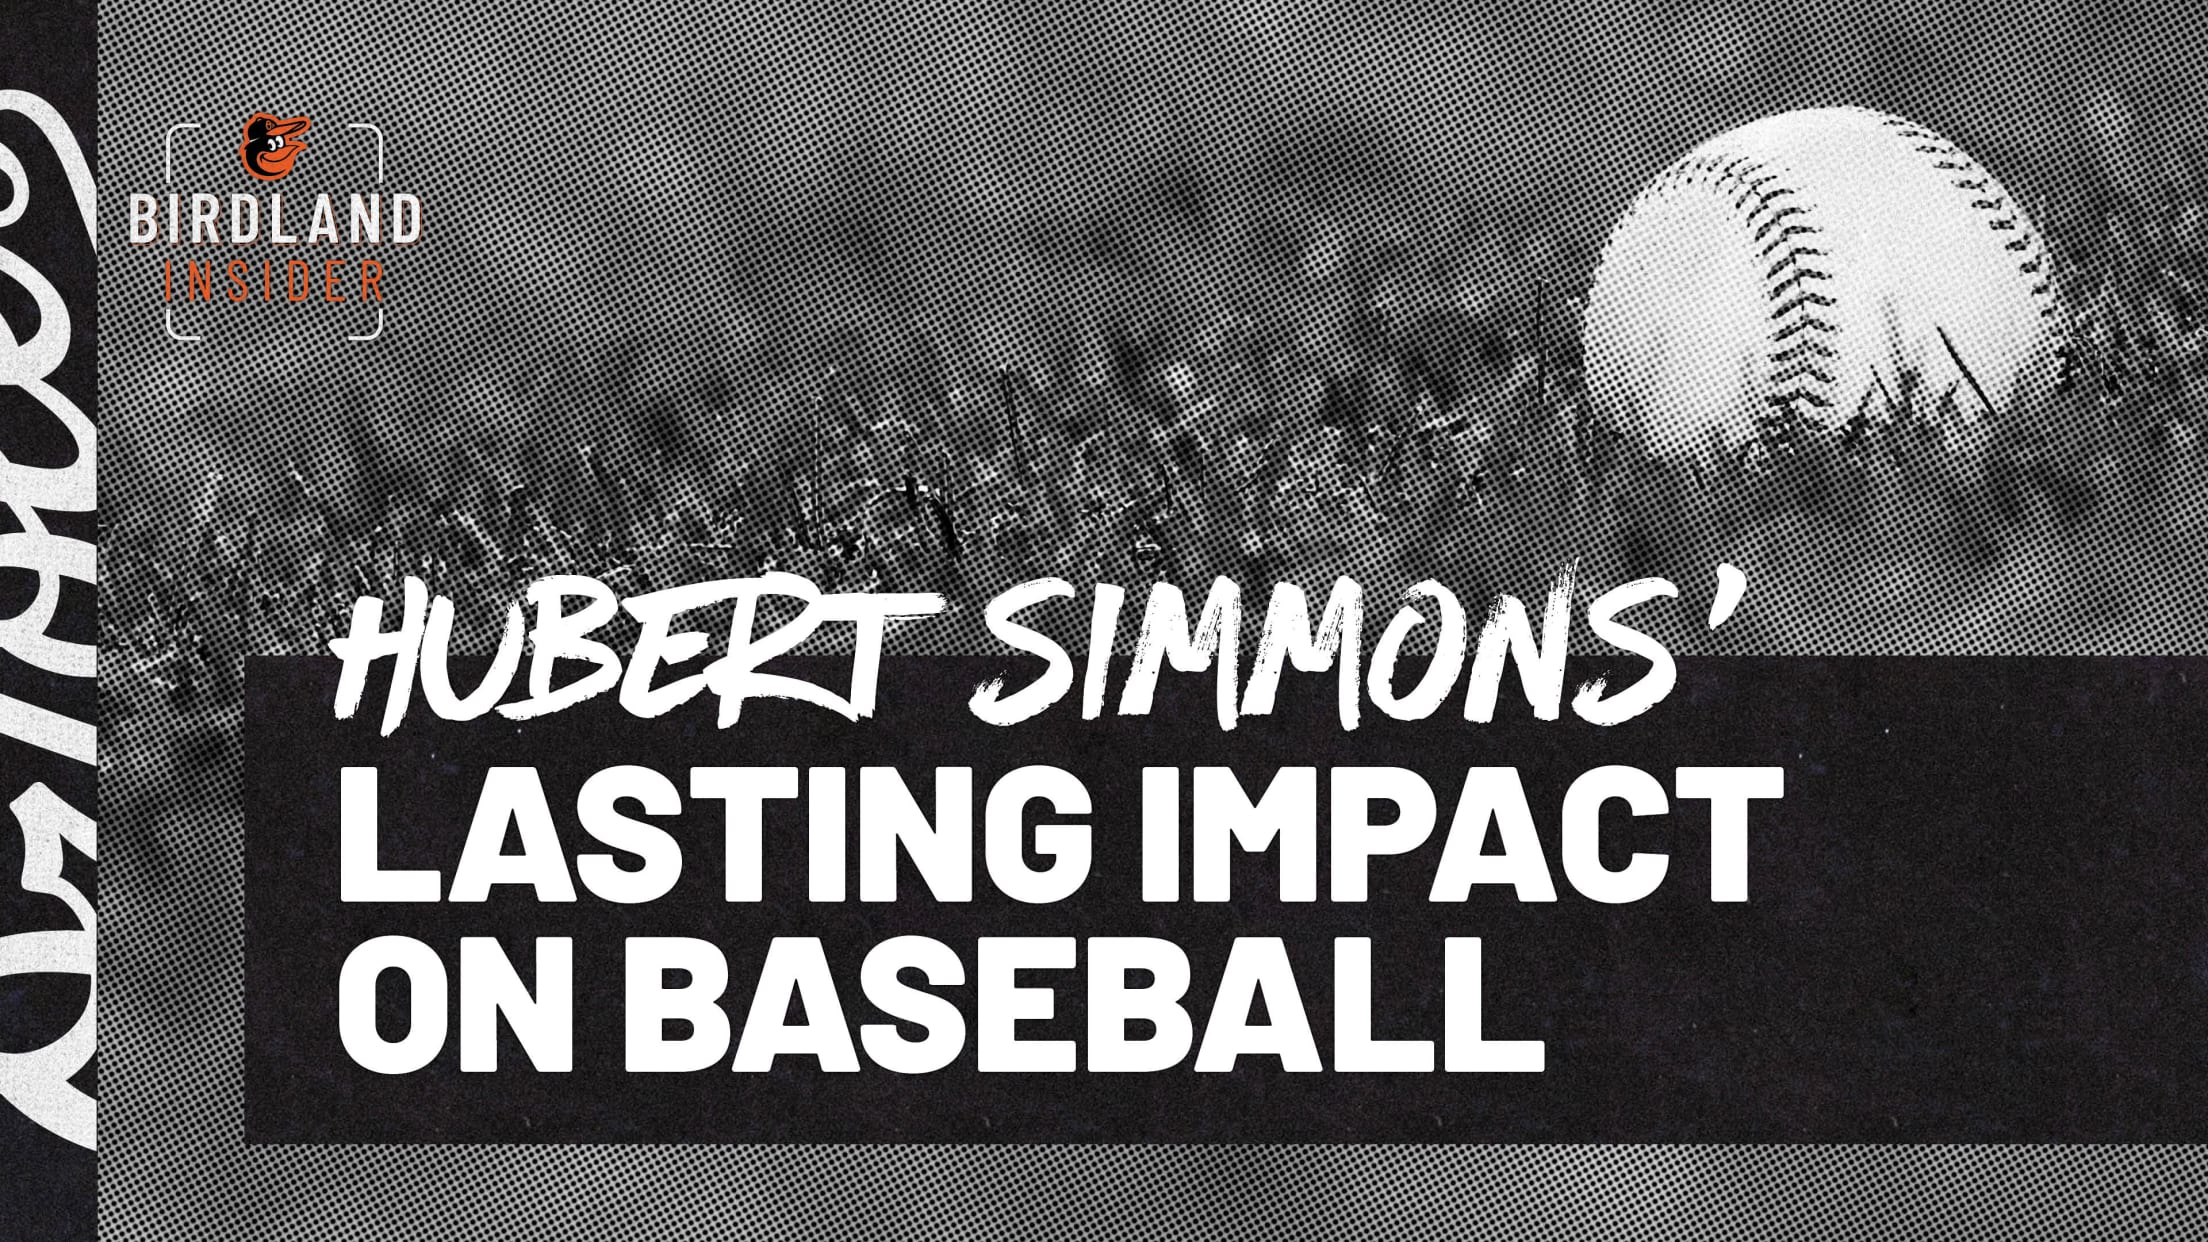 bal-hubert-simmons-lasting-impact-on-baseball-2840x2160